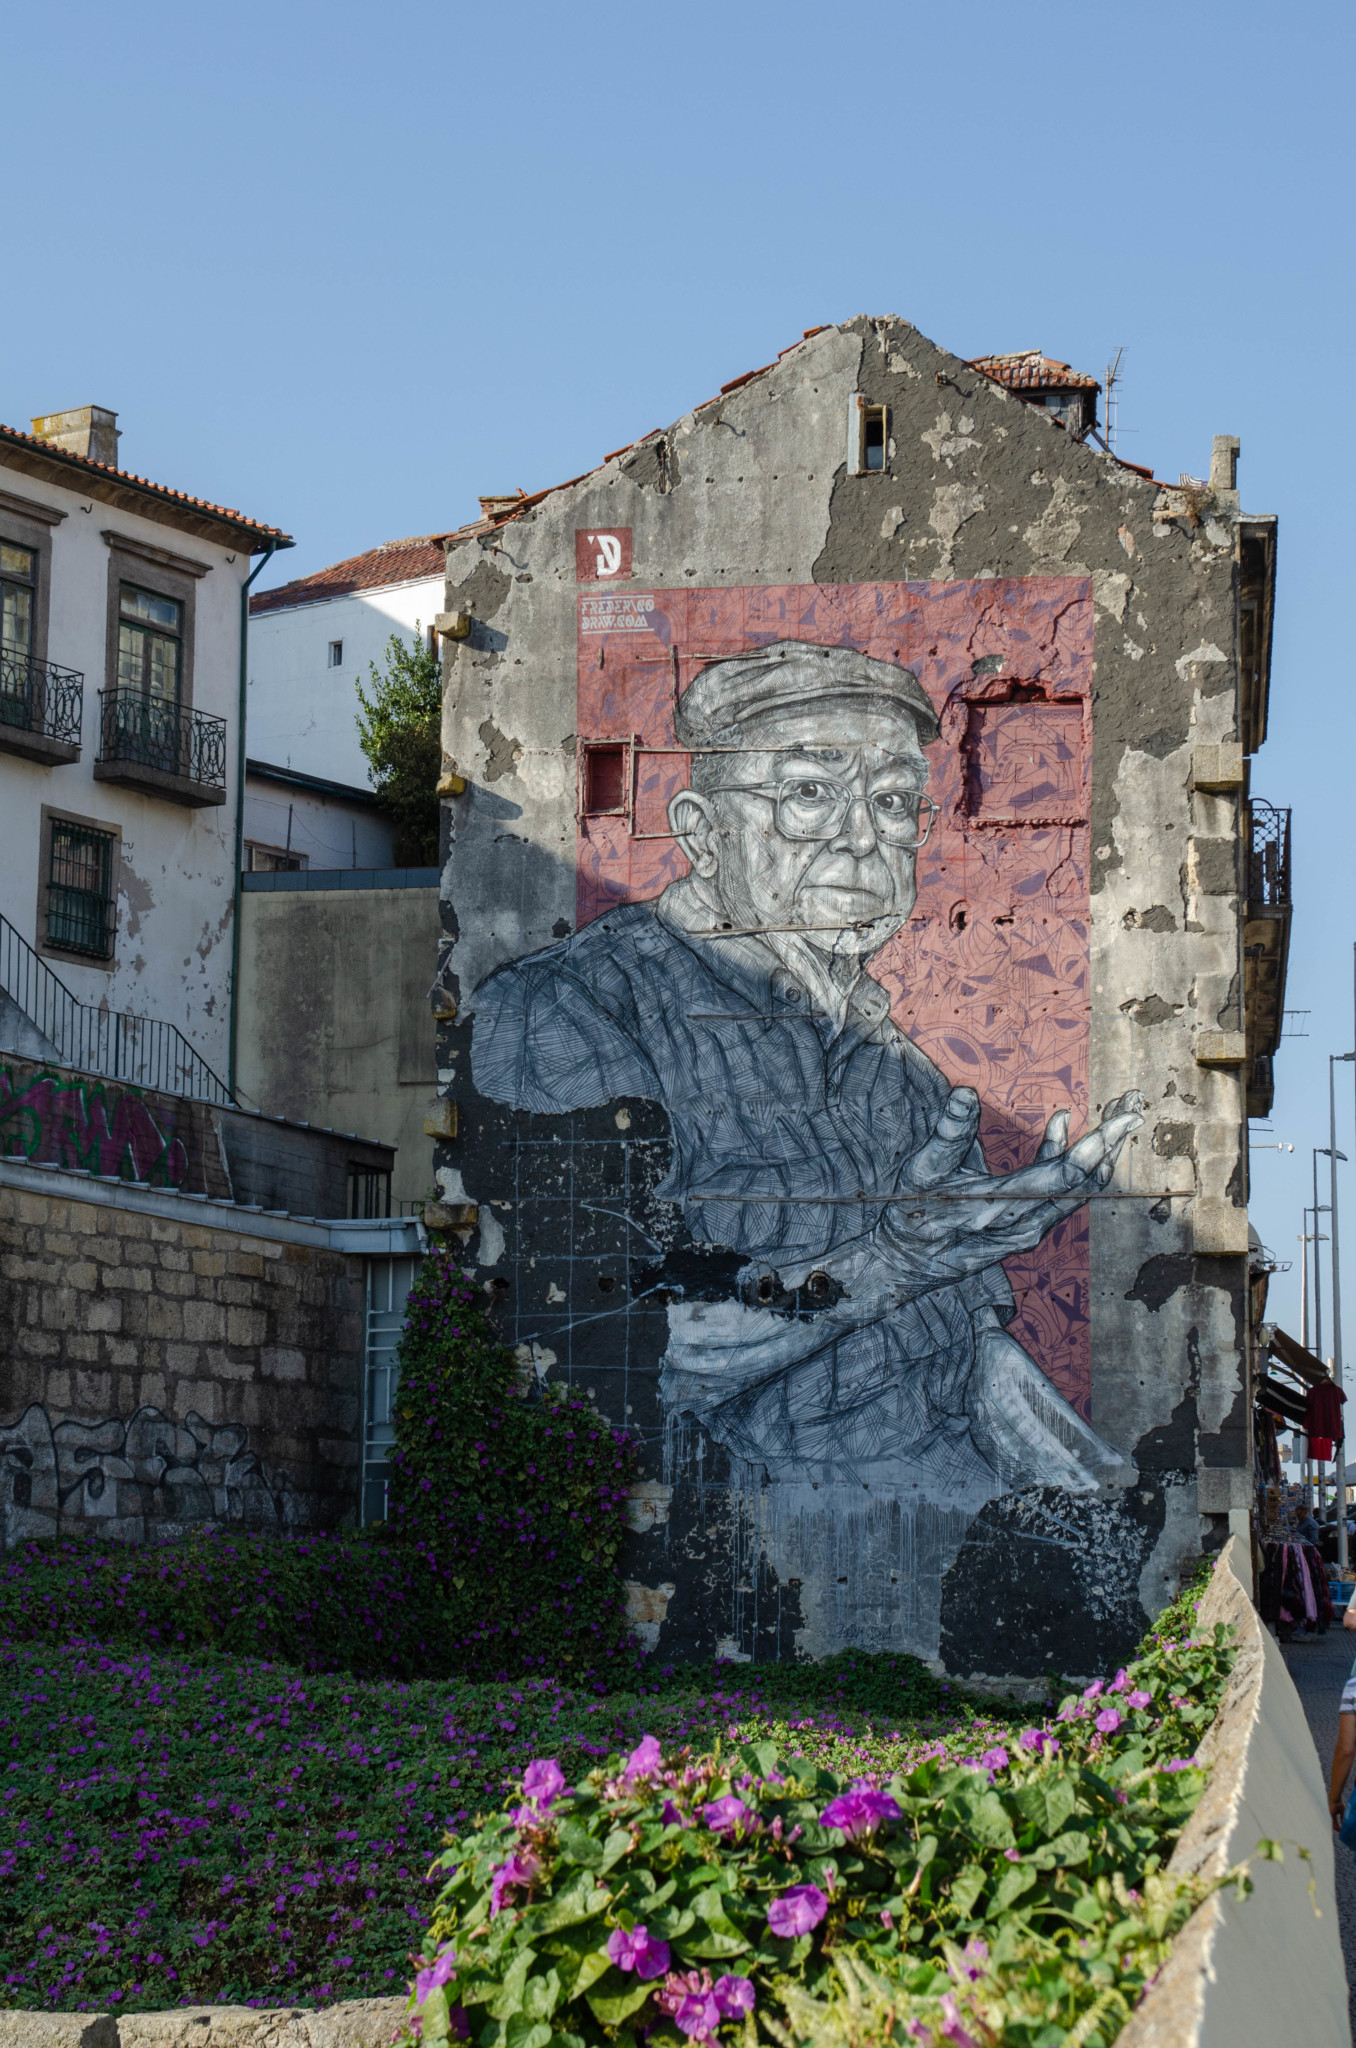 Streetart in Portugal